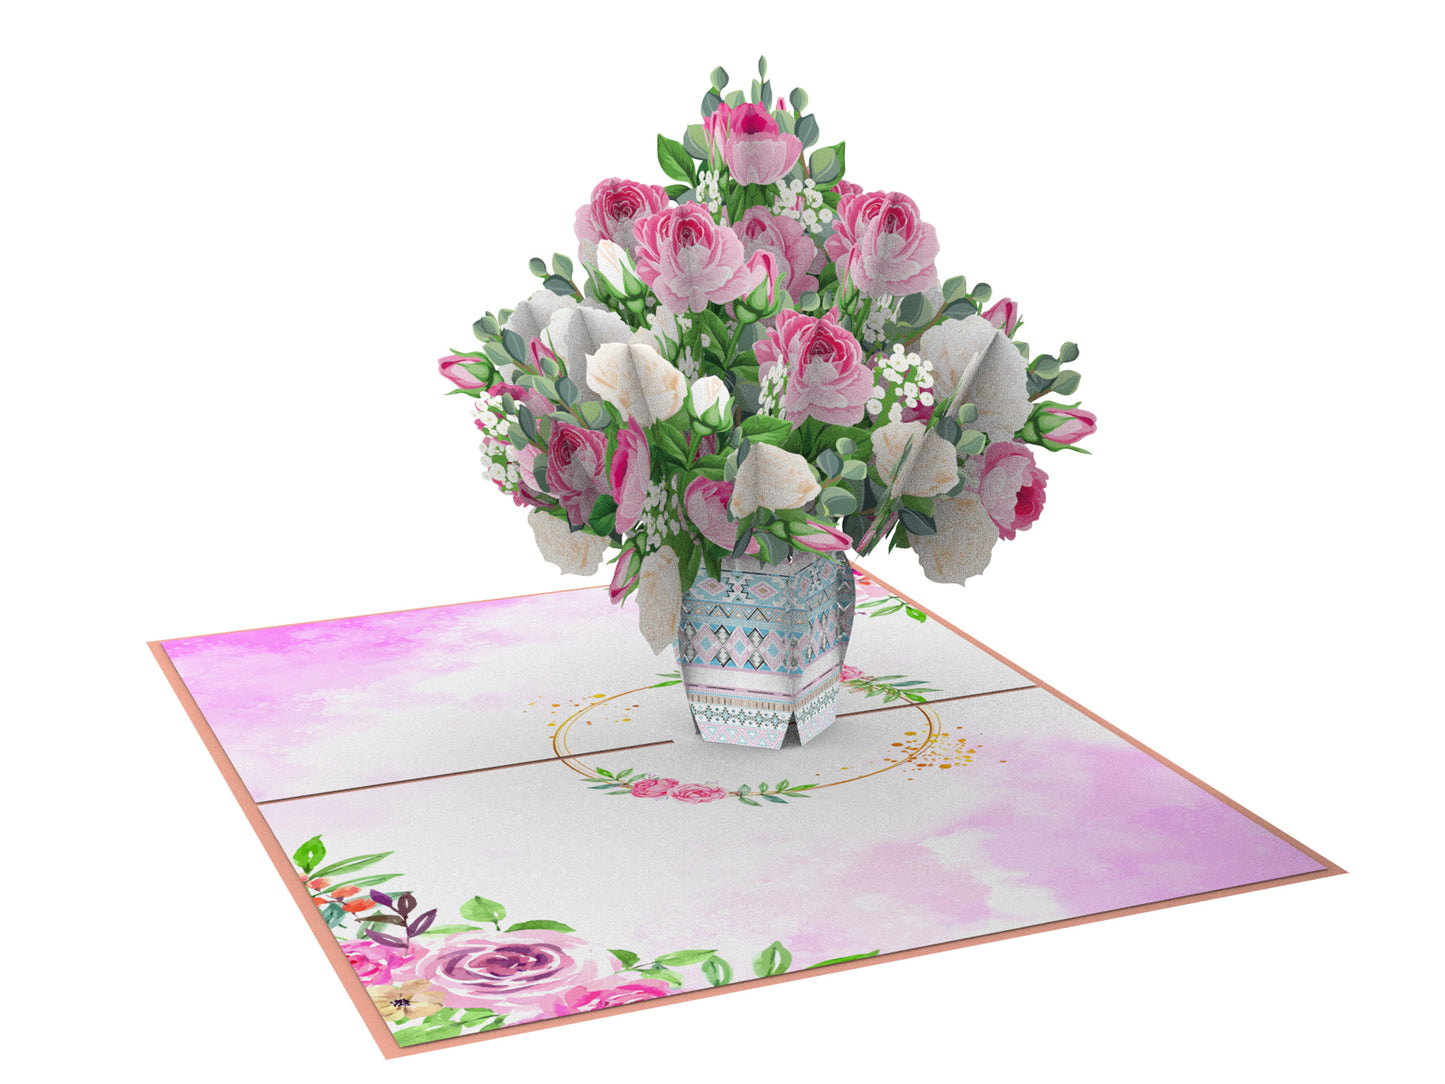 Arranged Rose Bouquet Pop-Up Card